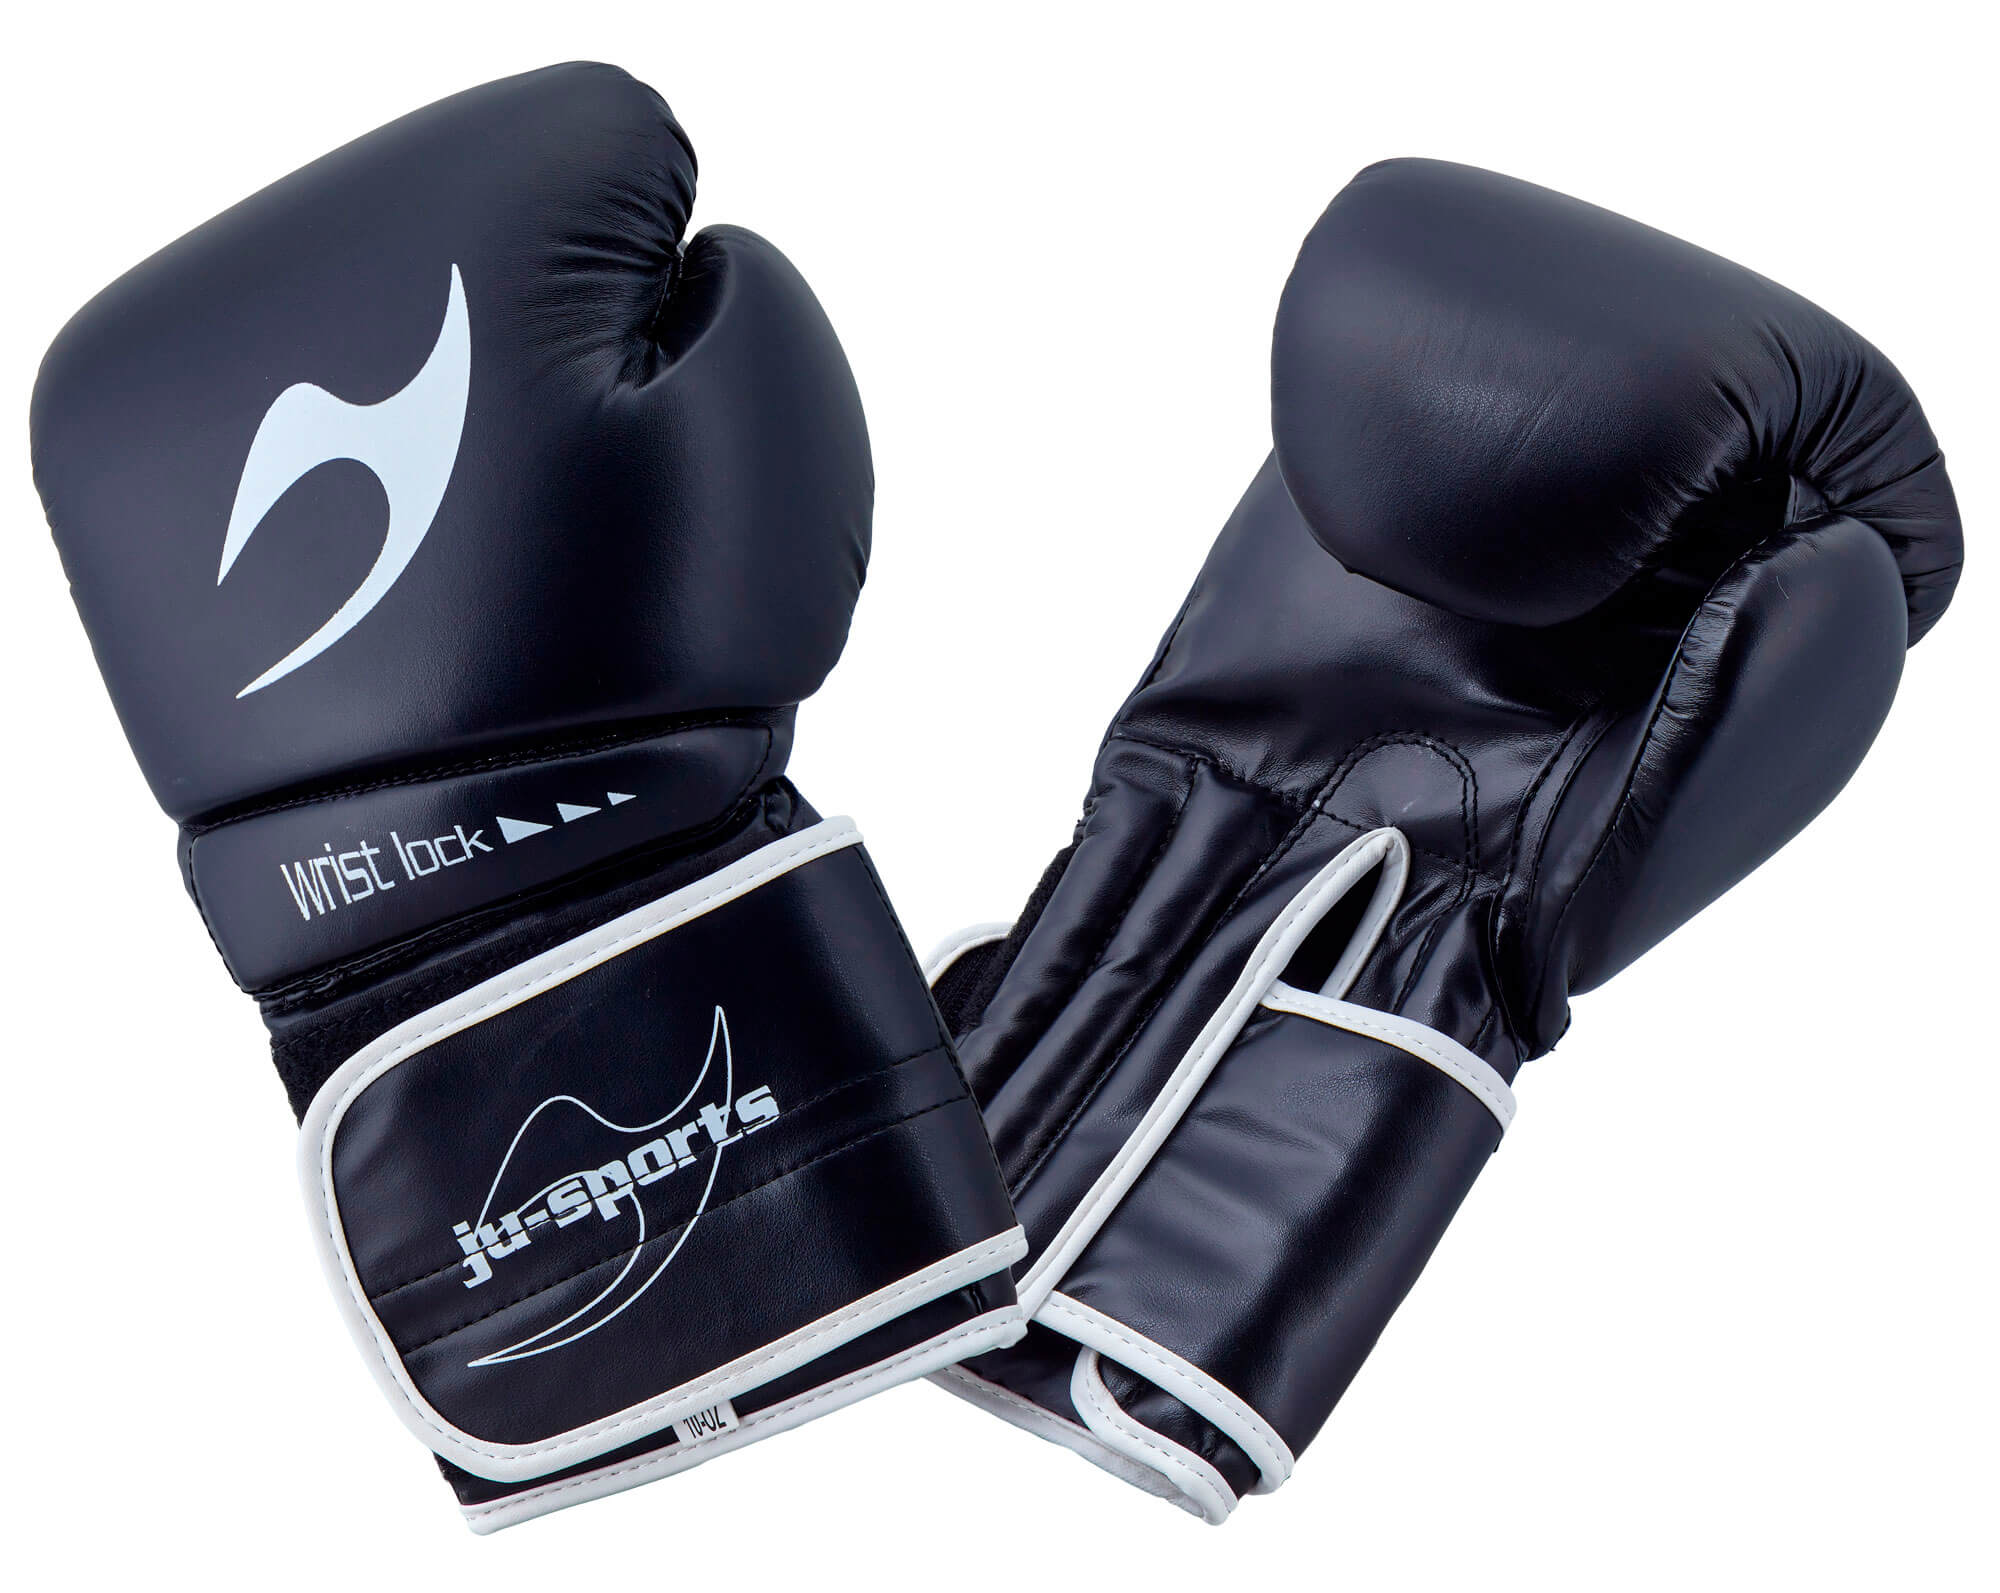 Ju-Sports Boxing Gloves C16 Competitor Pro PU black 10 oz